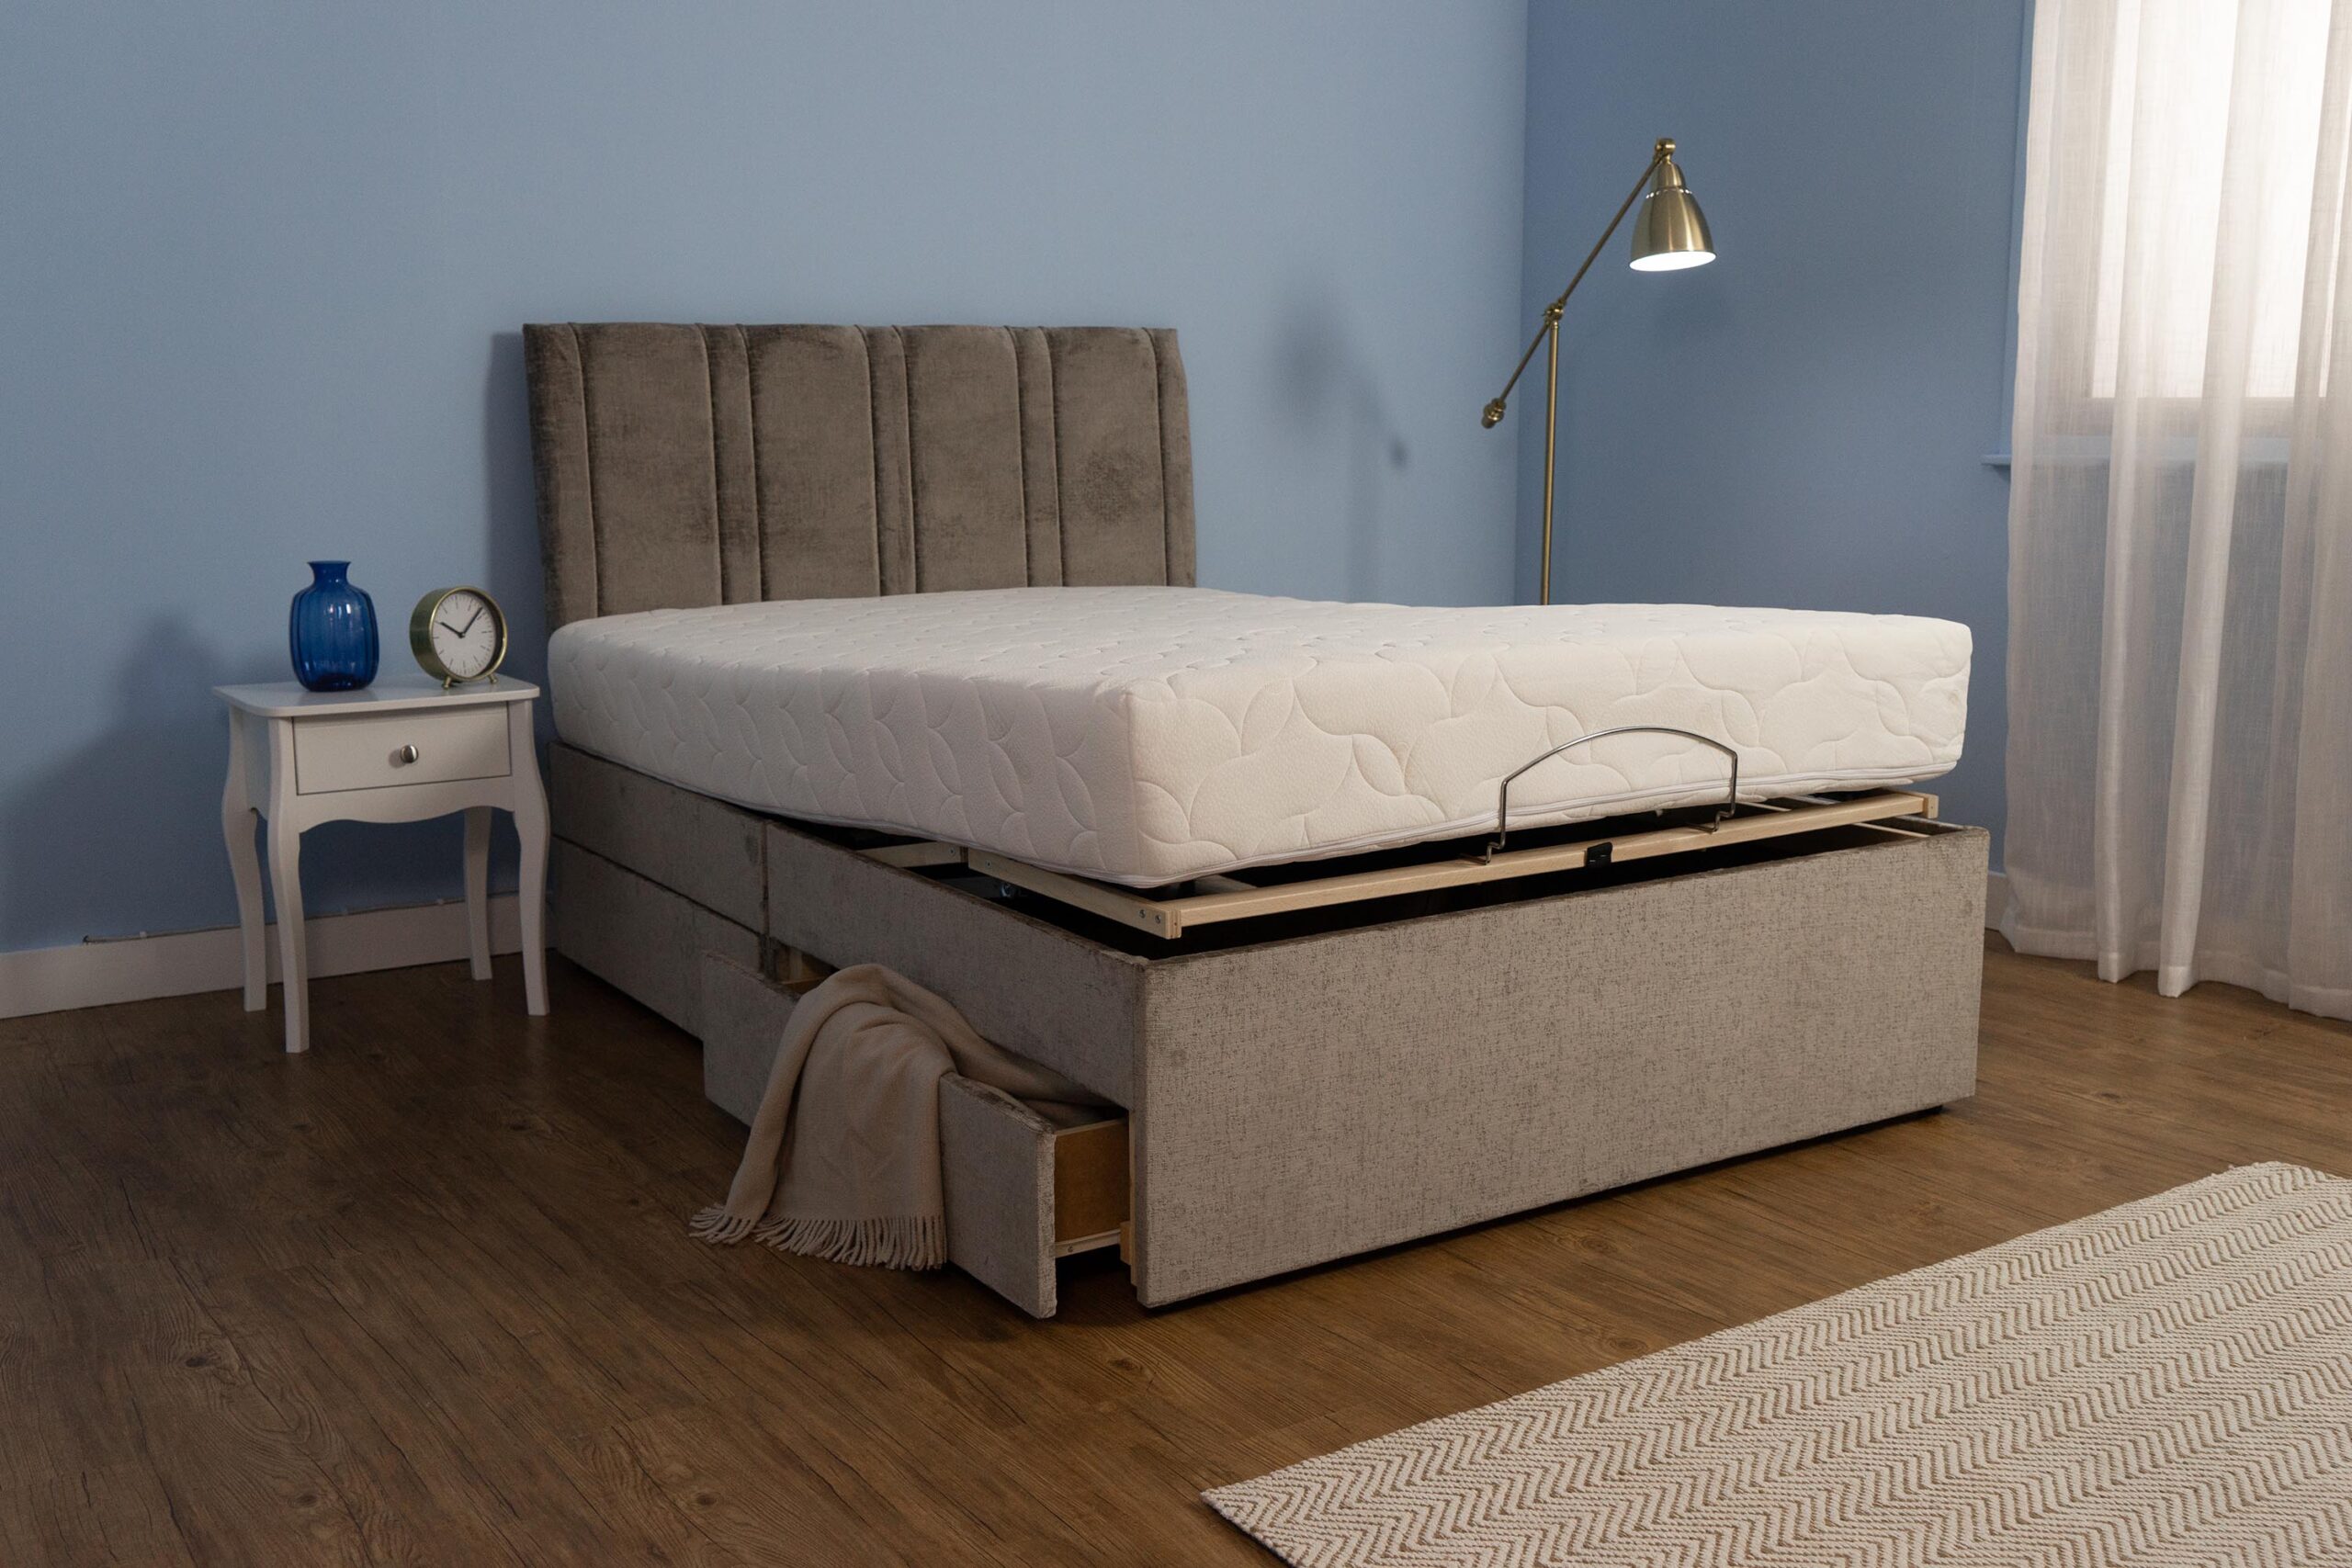 An adjustable divan ottoman bed with underbed storage.